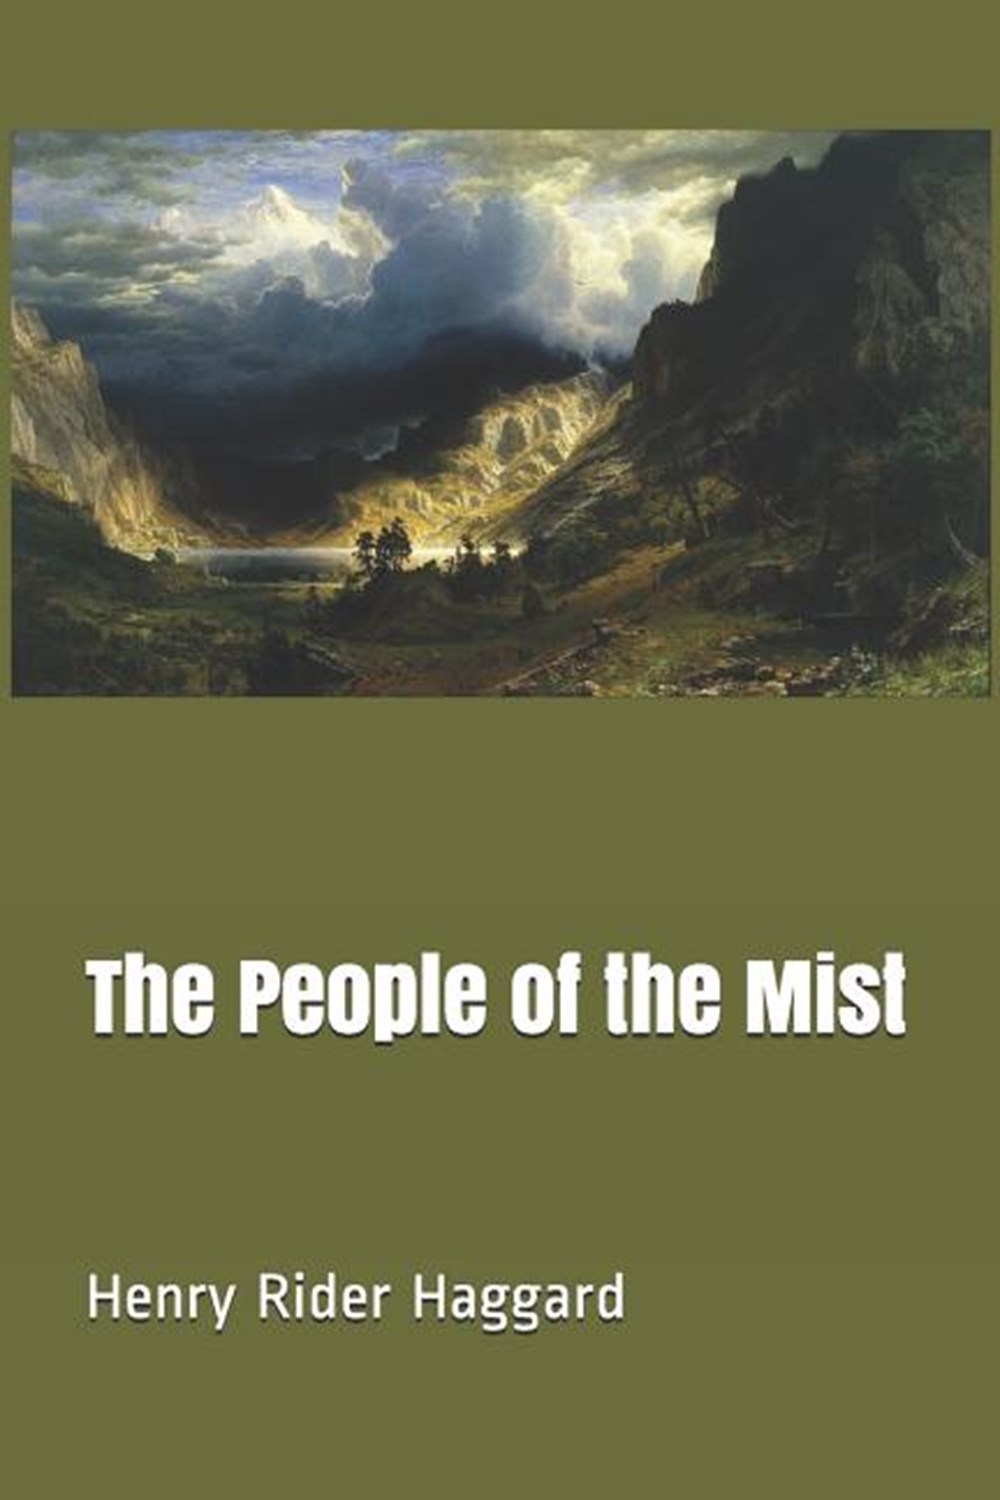 People of the Mist